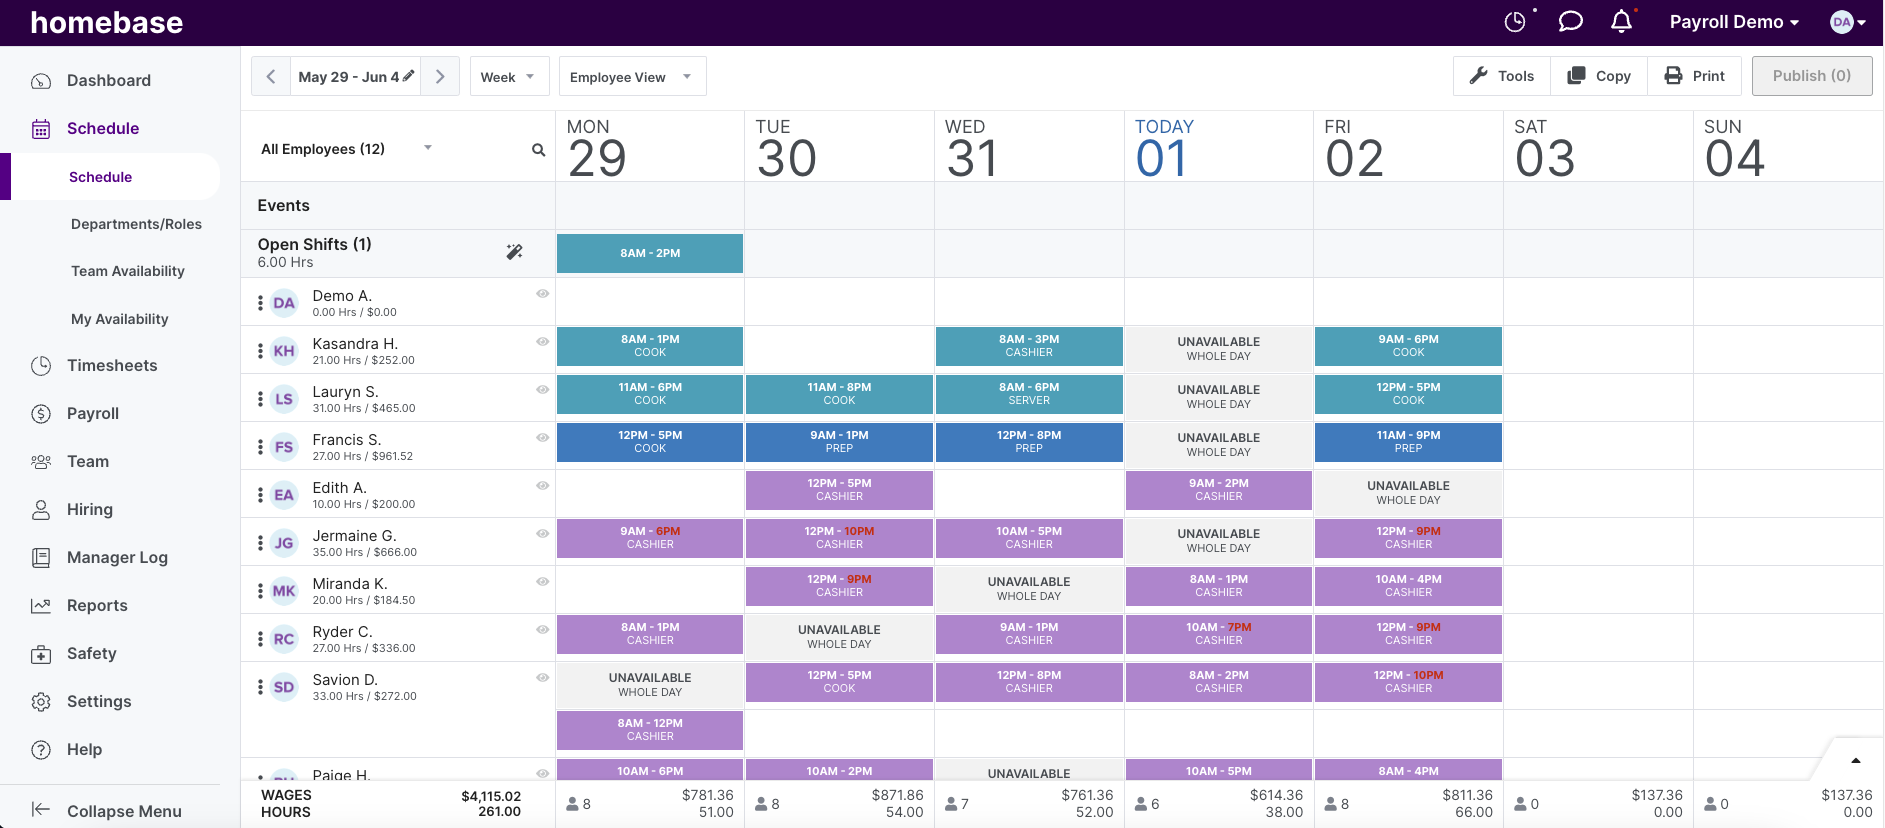 A screenshot of Homebase scheduling, displayed in a calendar view.